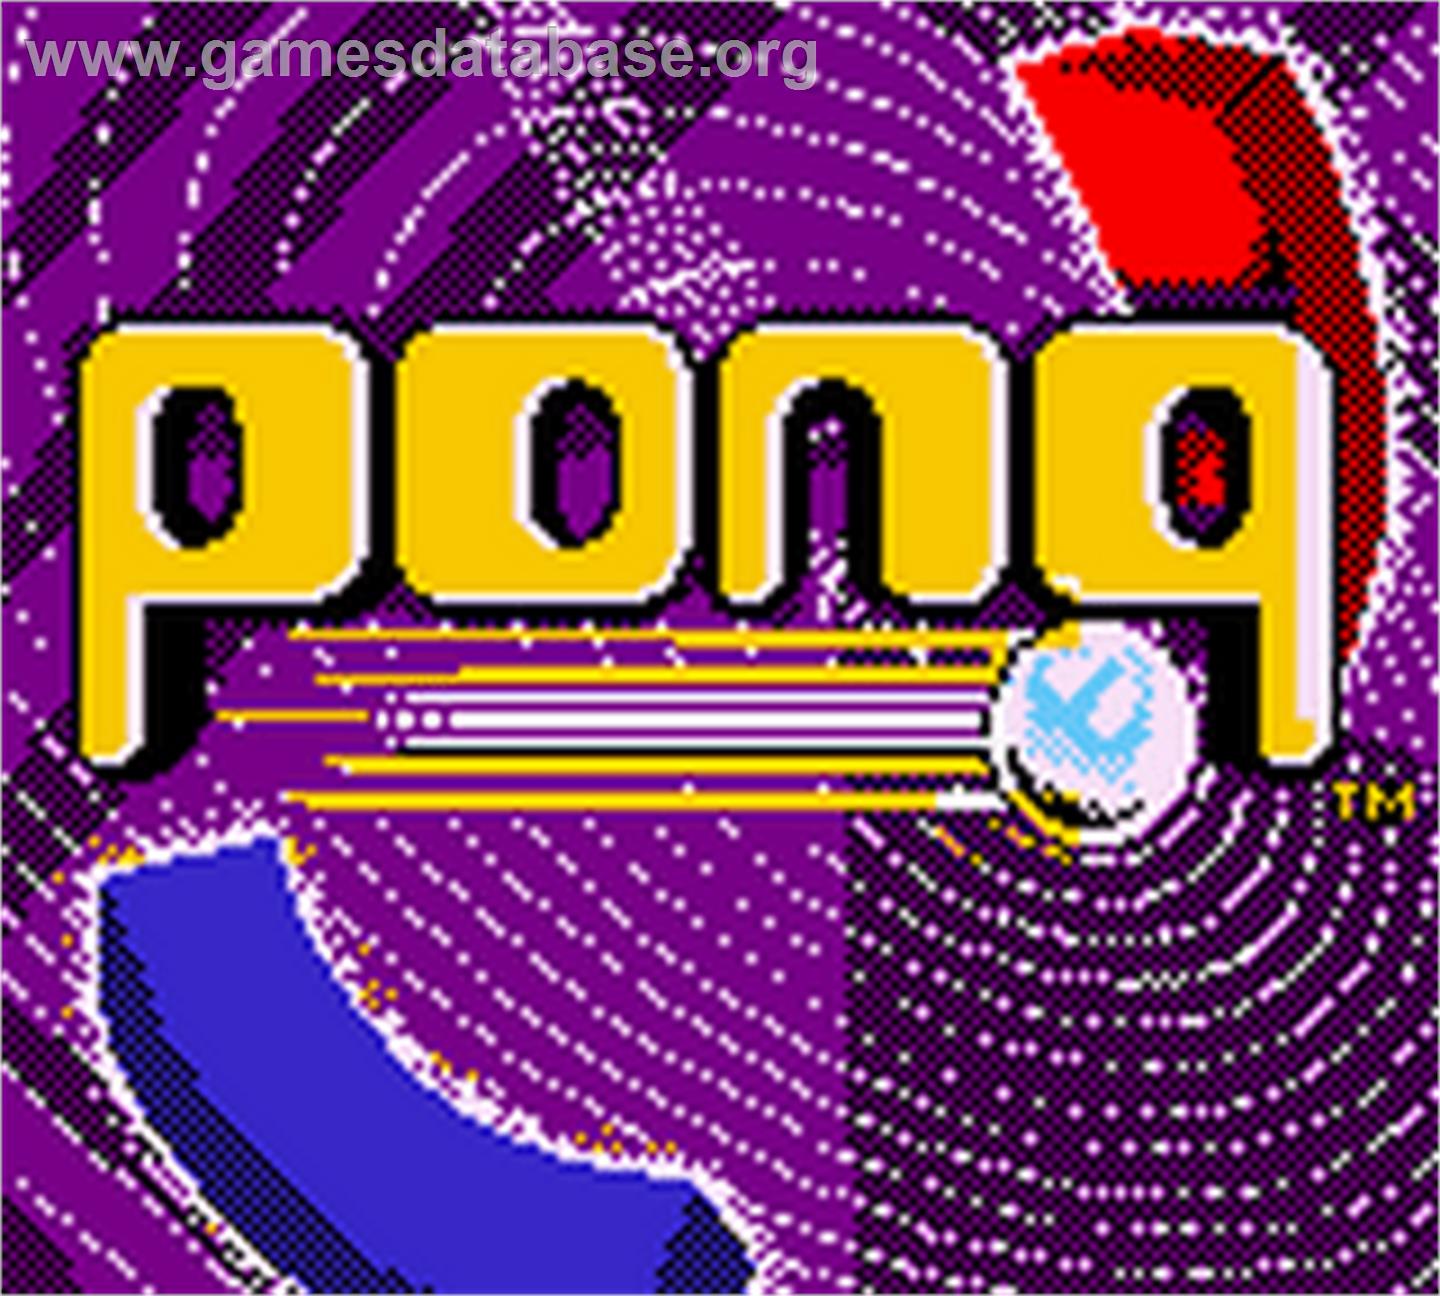 Pong: The Next Level - Nintendo Game Boy Color - Artwork - Title Screen